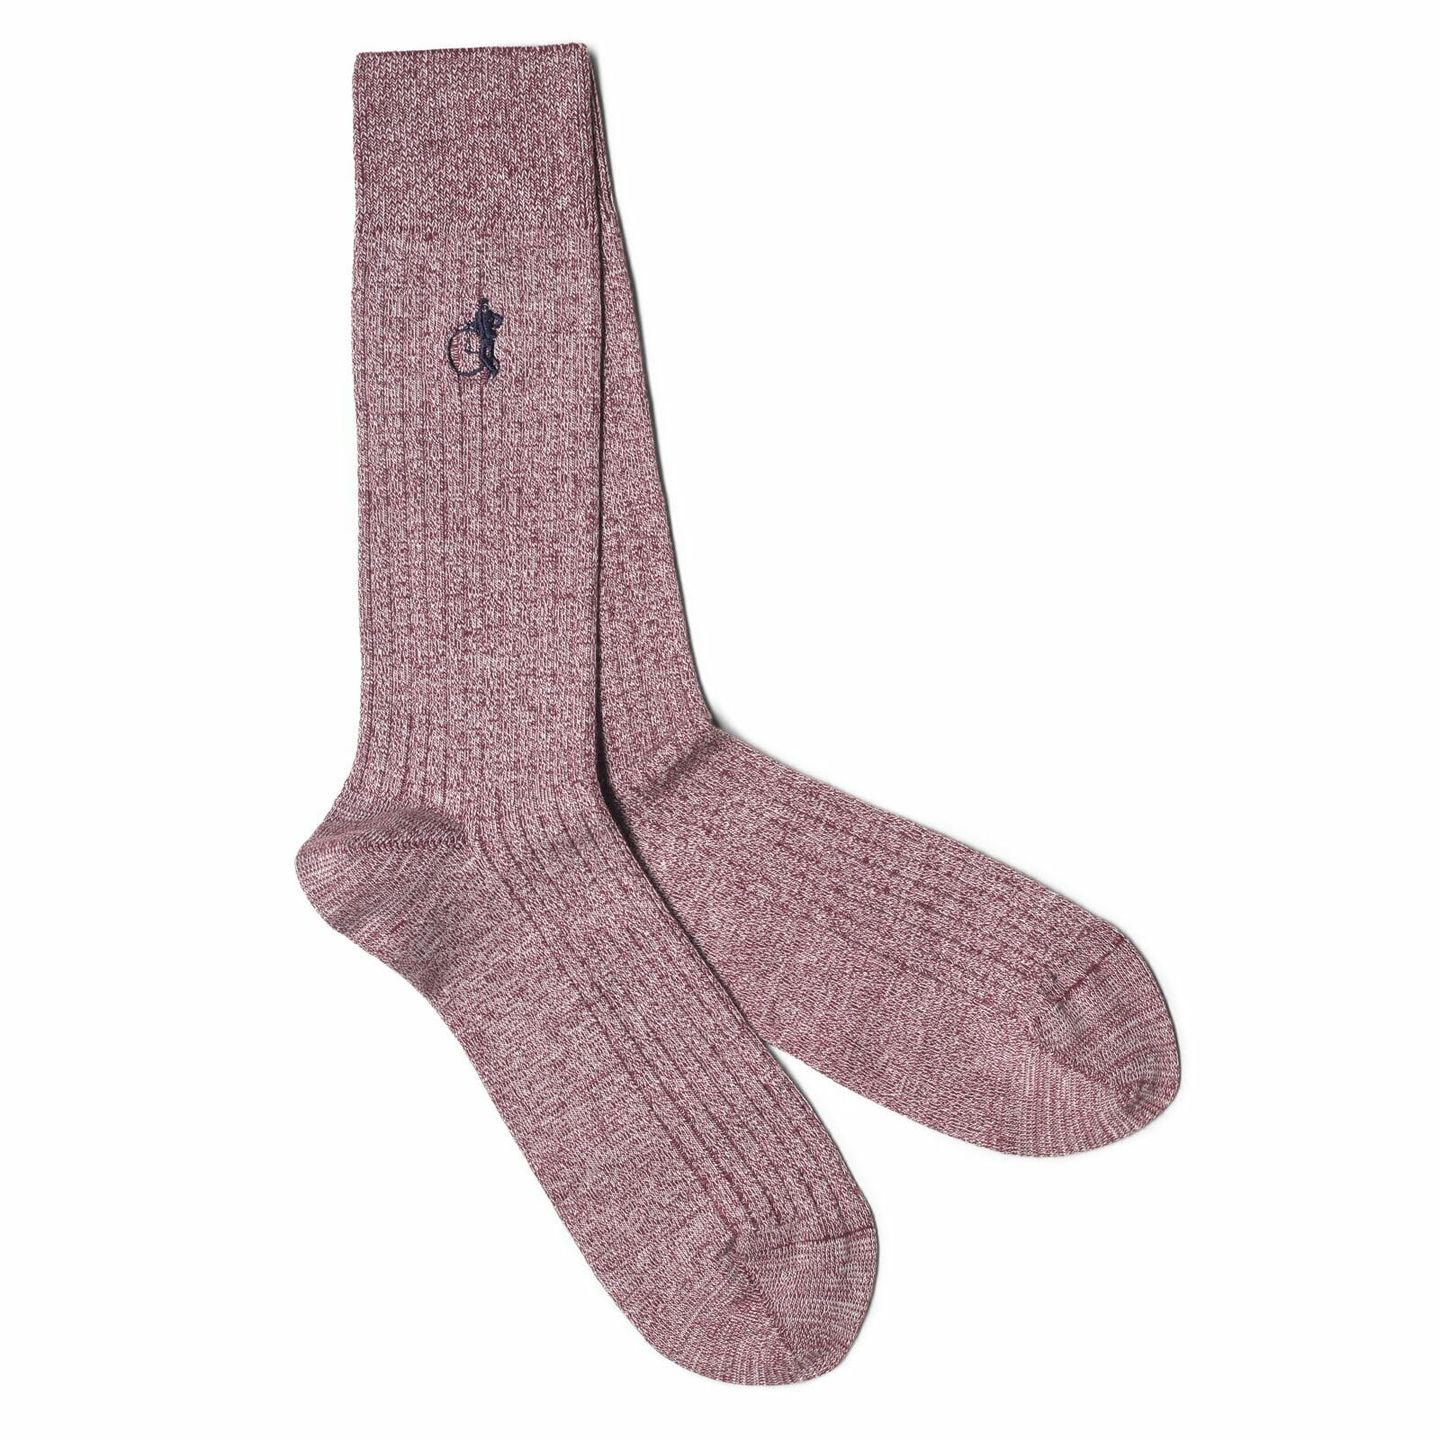 A pair of light pink socks